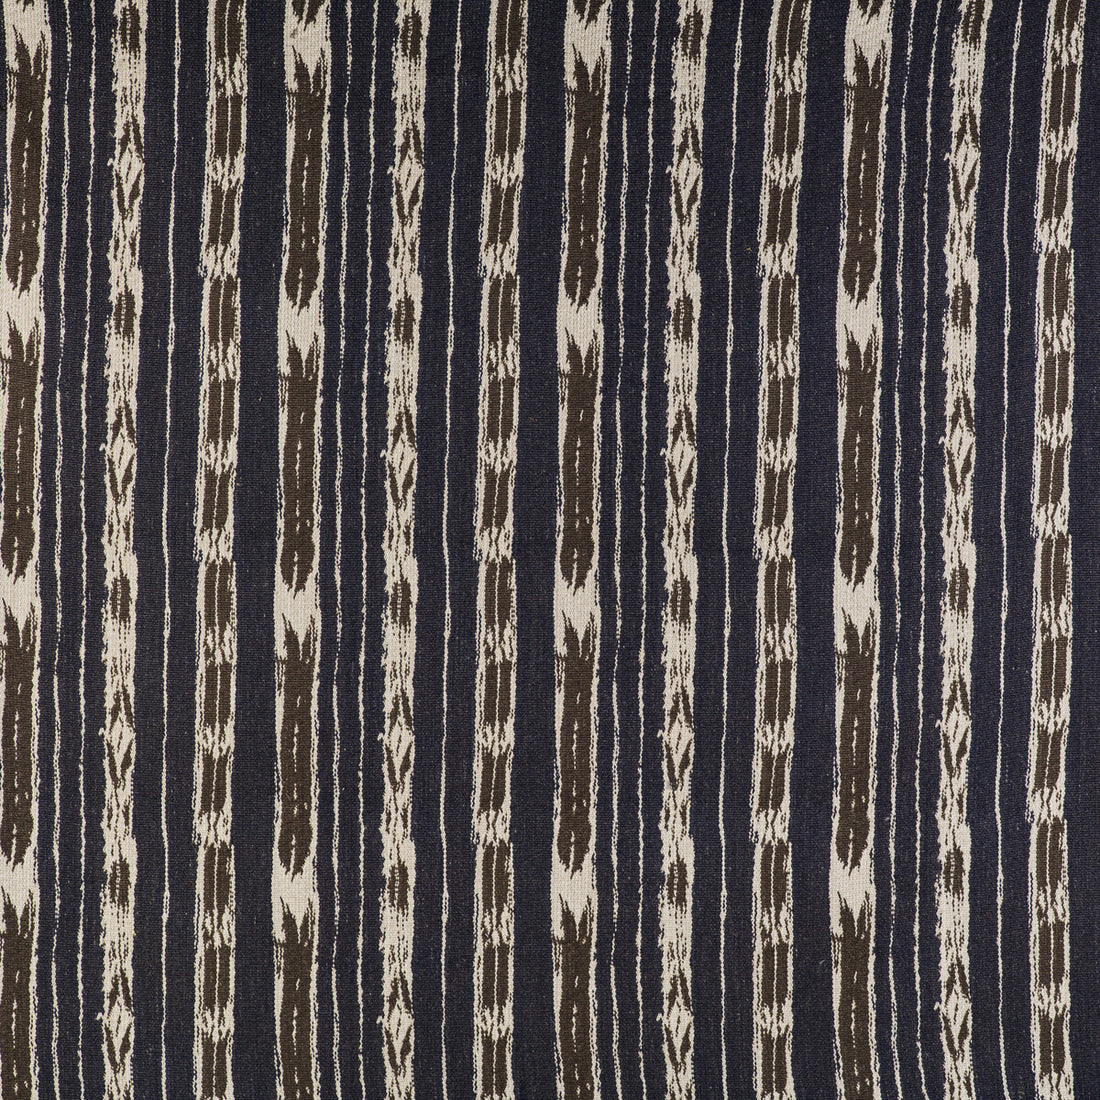 Bandas fabric in crudo/azul color - pattern GDT5497.003.0 - by Gaston y Daniela in the Gaston Libreria collection